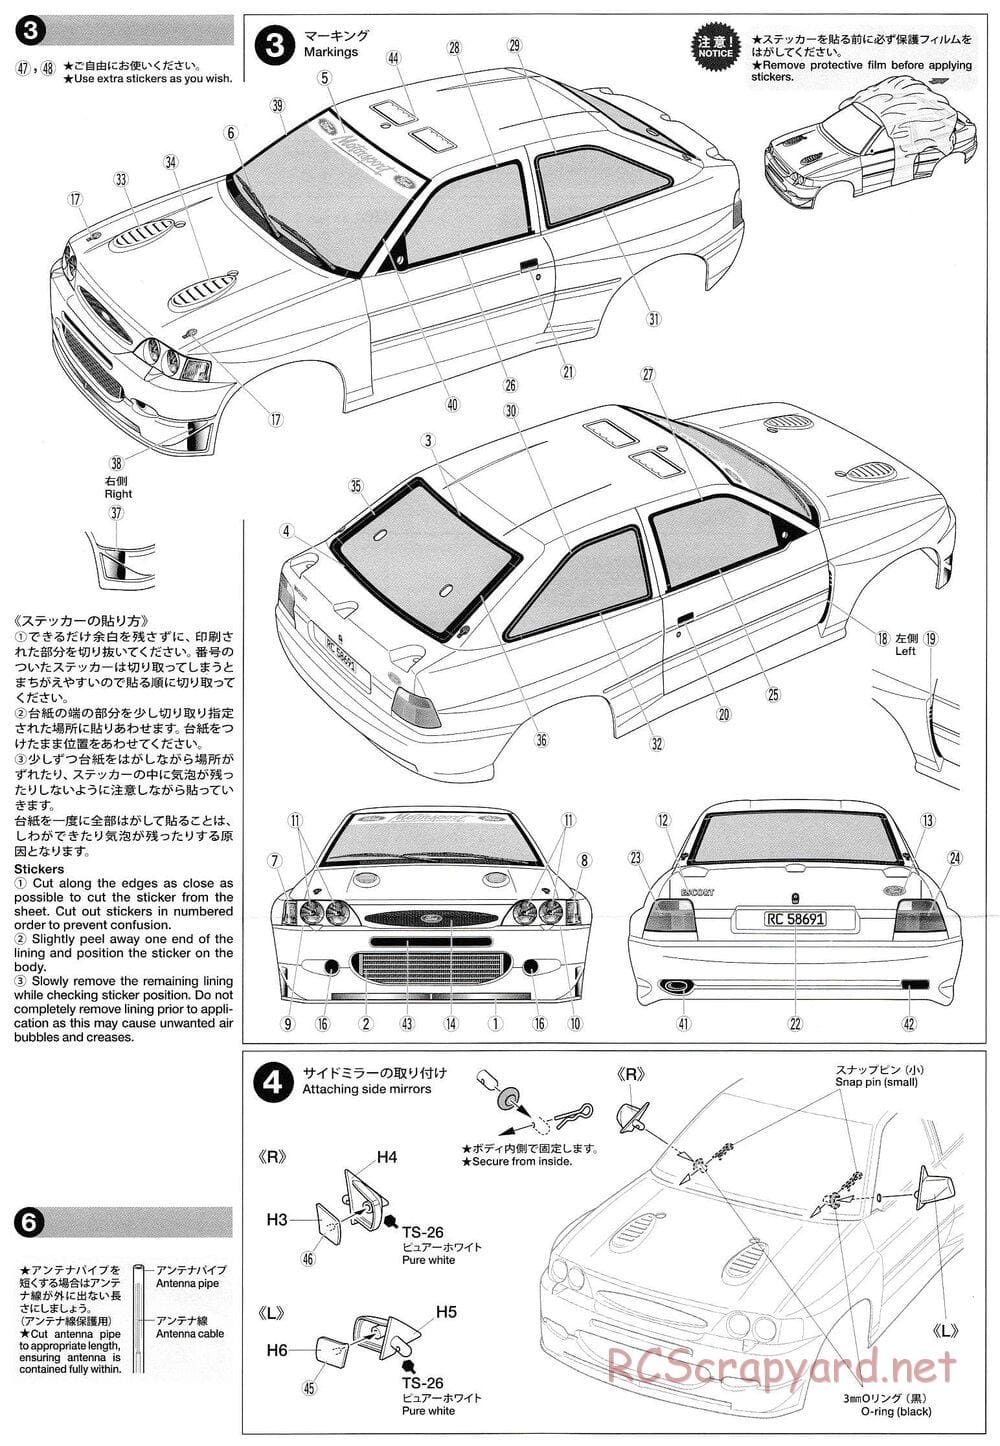 Tamiya - 1998 Ford Escort Custom - TT-02 Chassis - Body Manual - Page 4